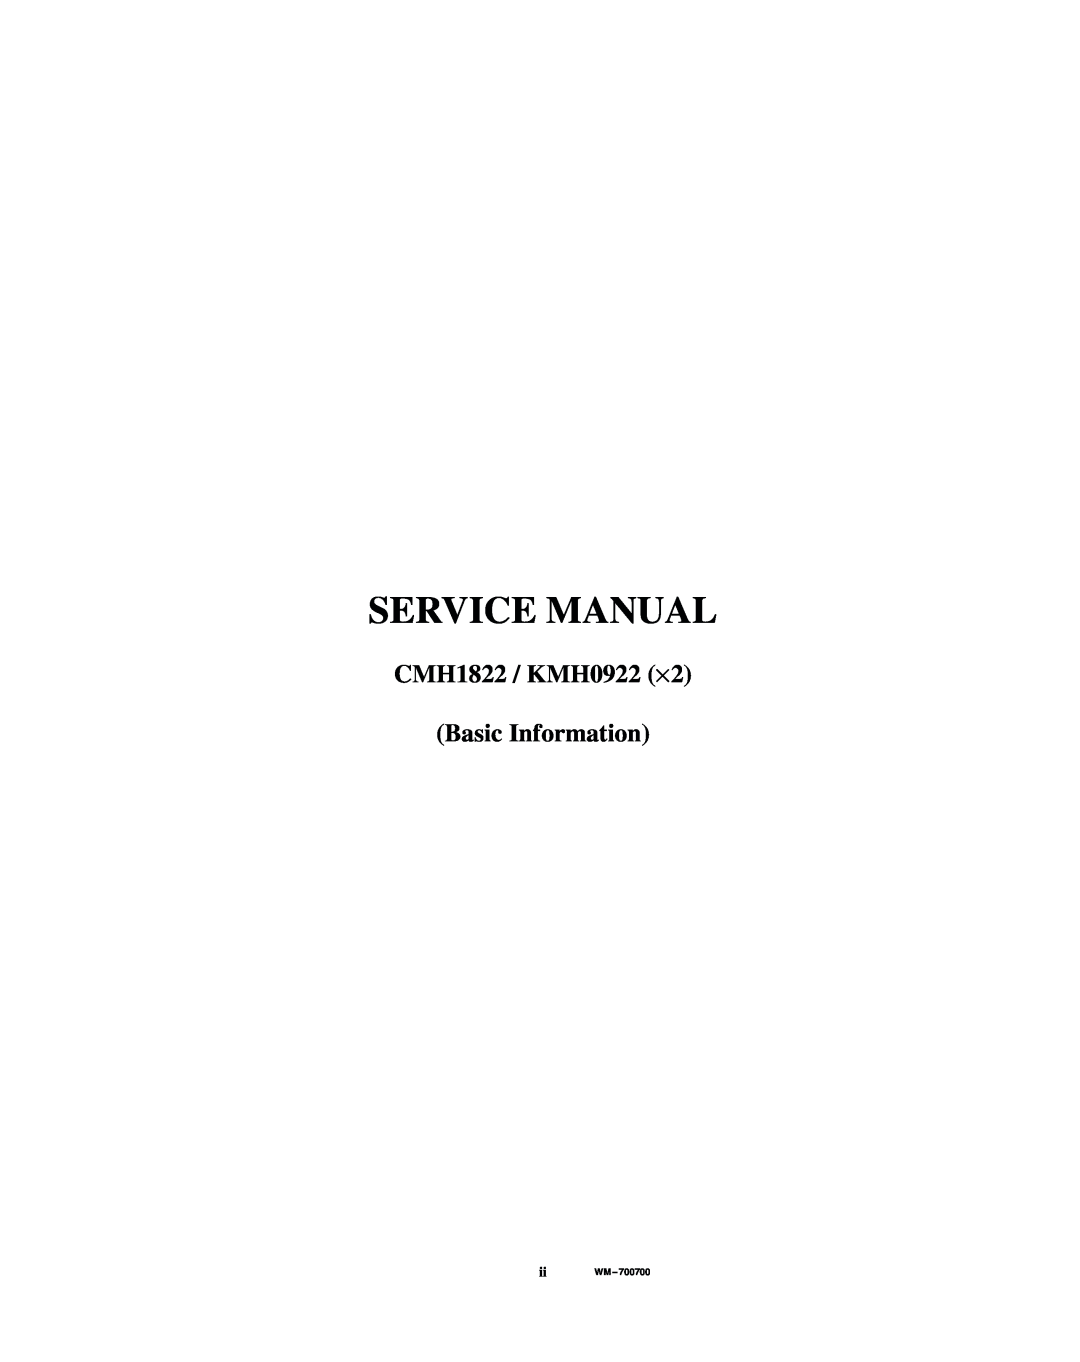 Sanyo service manual CMH1822 / KMH0922 ⋅2 Basic Information, ii WM 